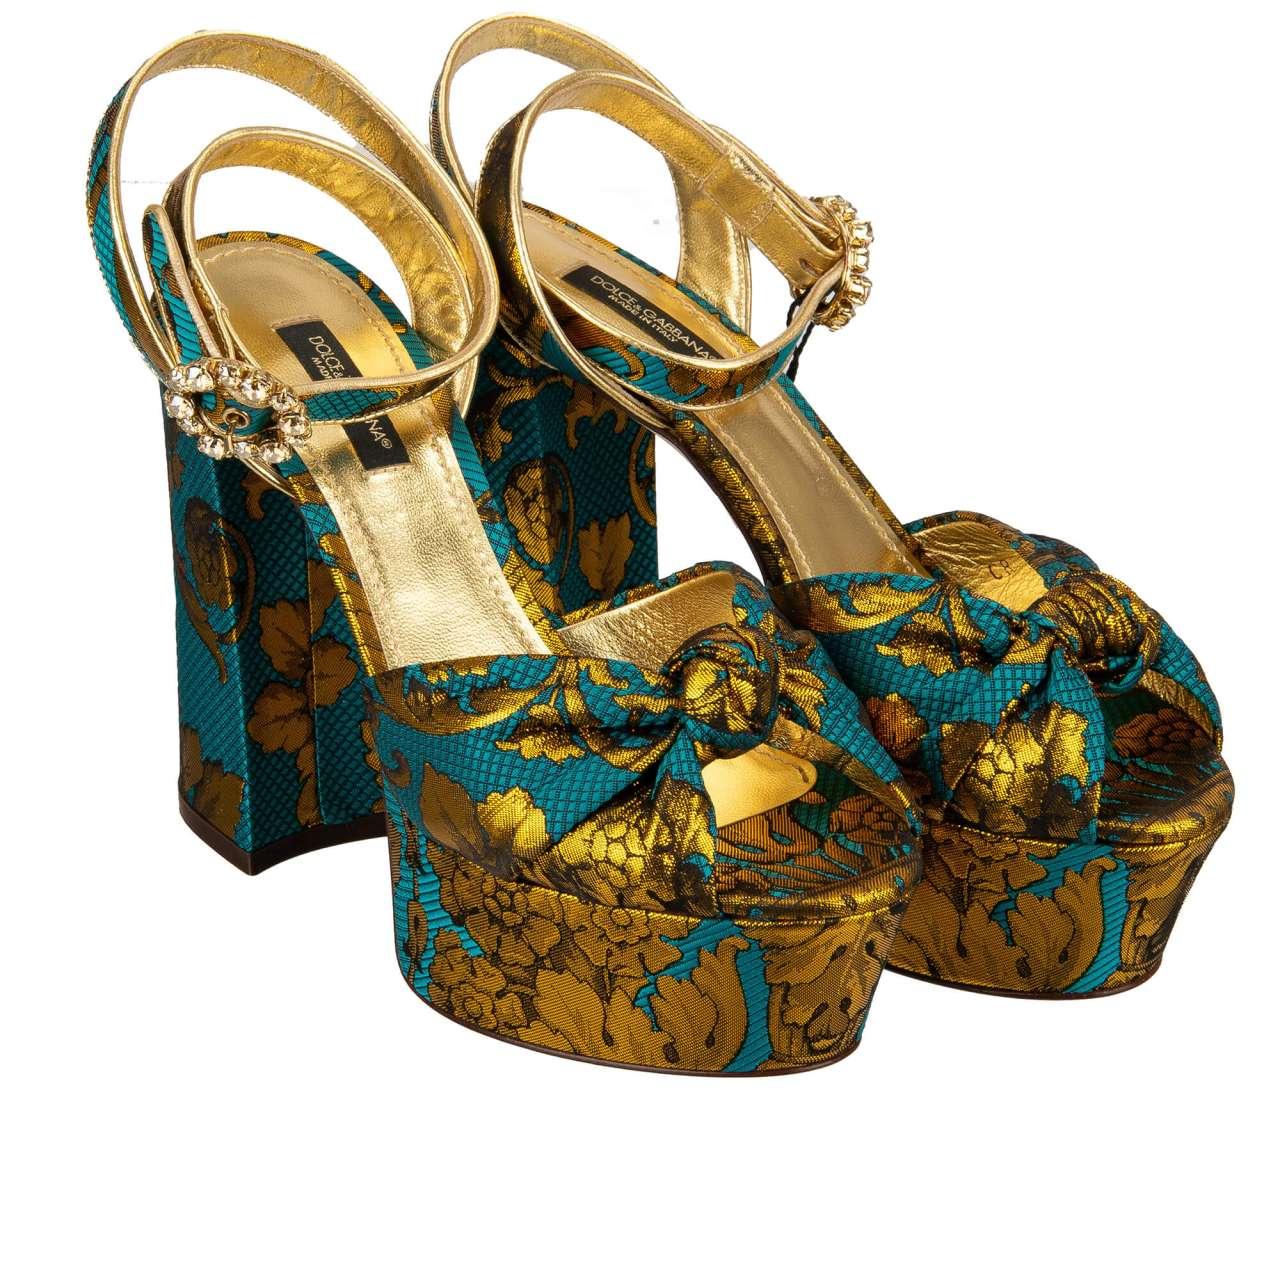 D&G - Baroque Crystal Leather Plateau Pumps Sandals KEIRA Gold Blue 40 1